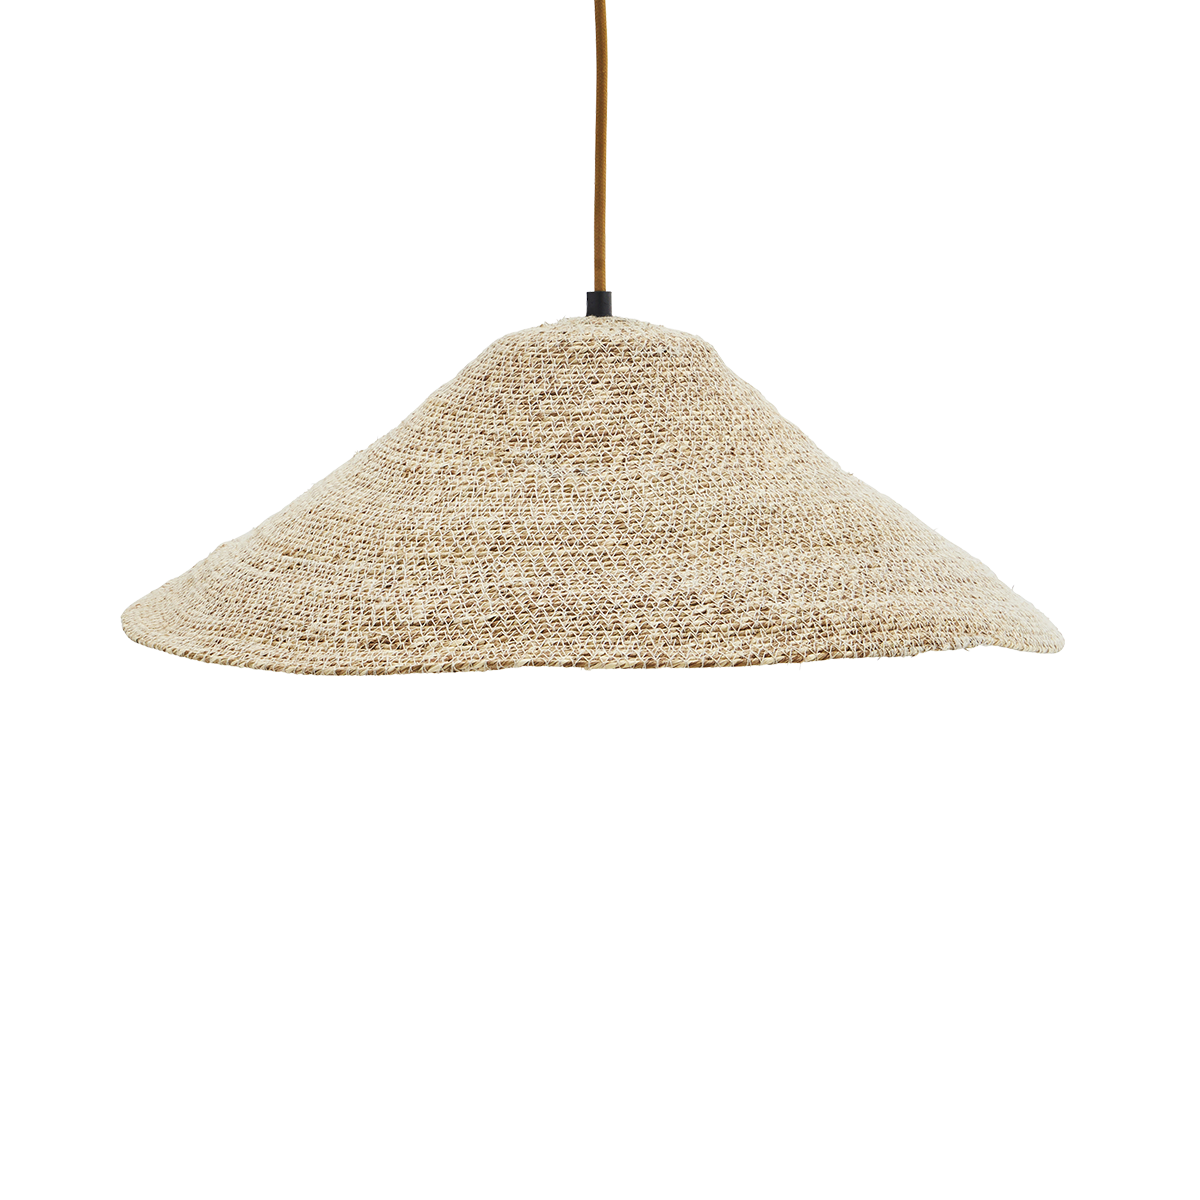 Grass ceiling lamp